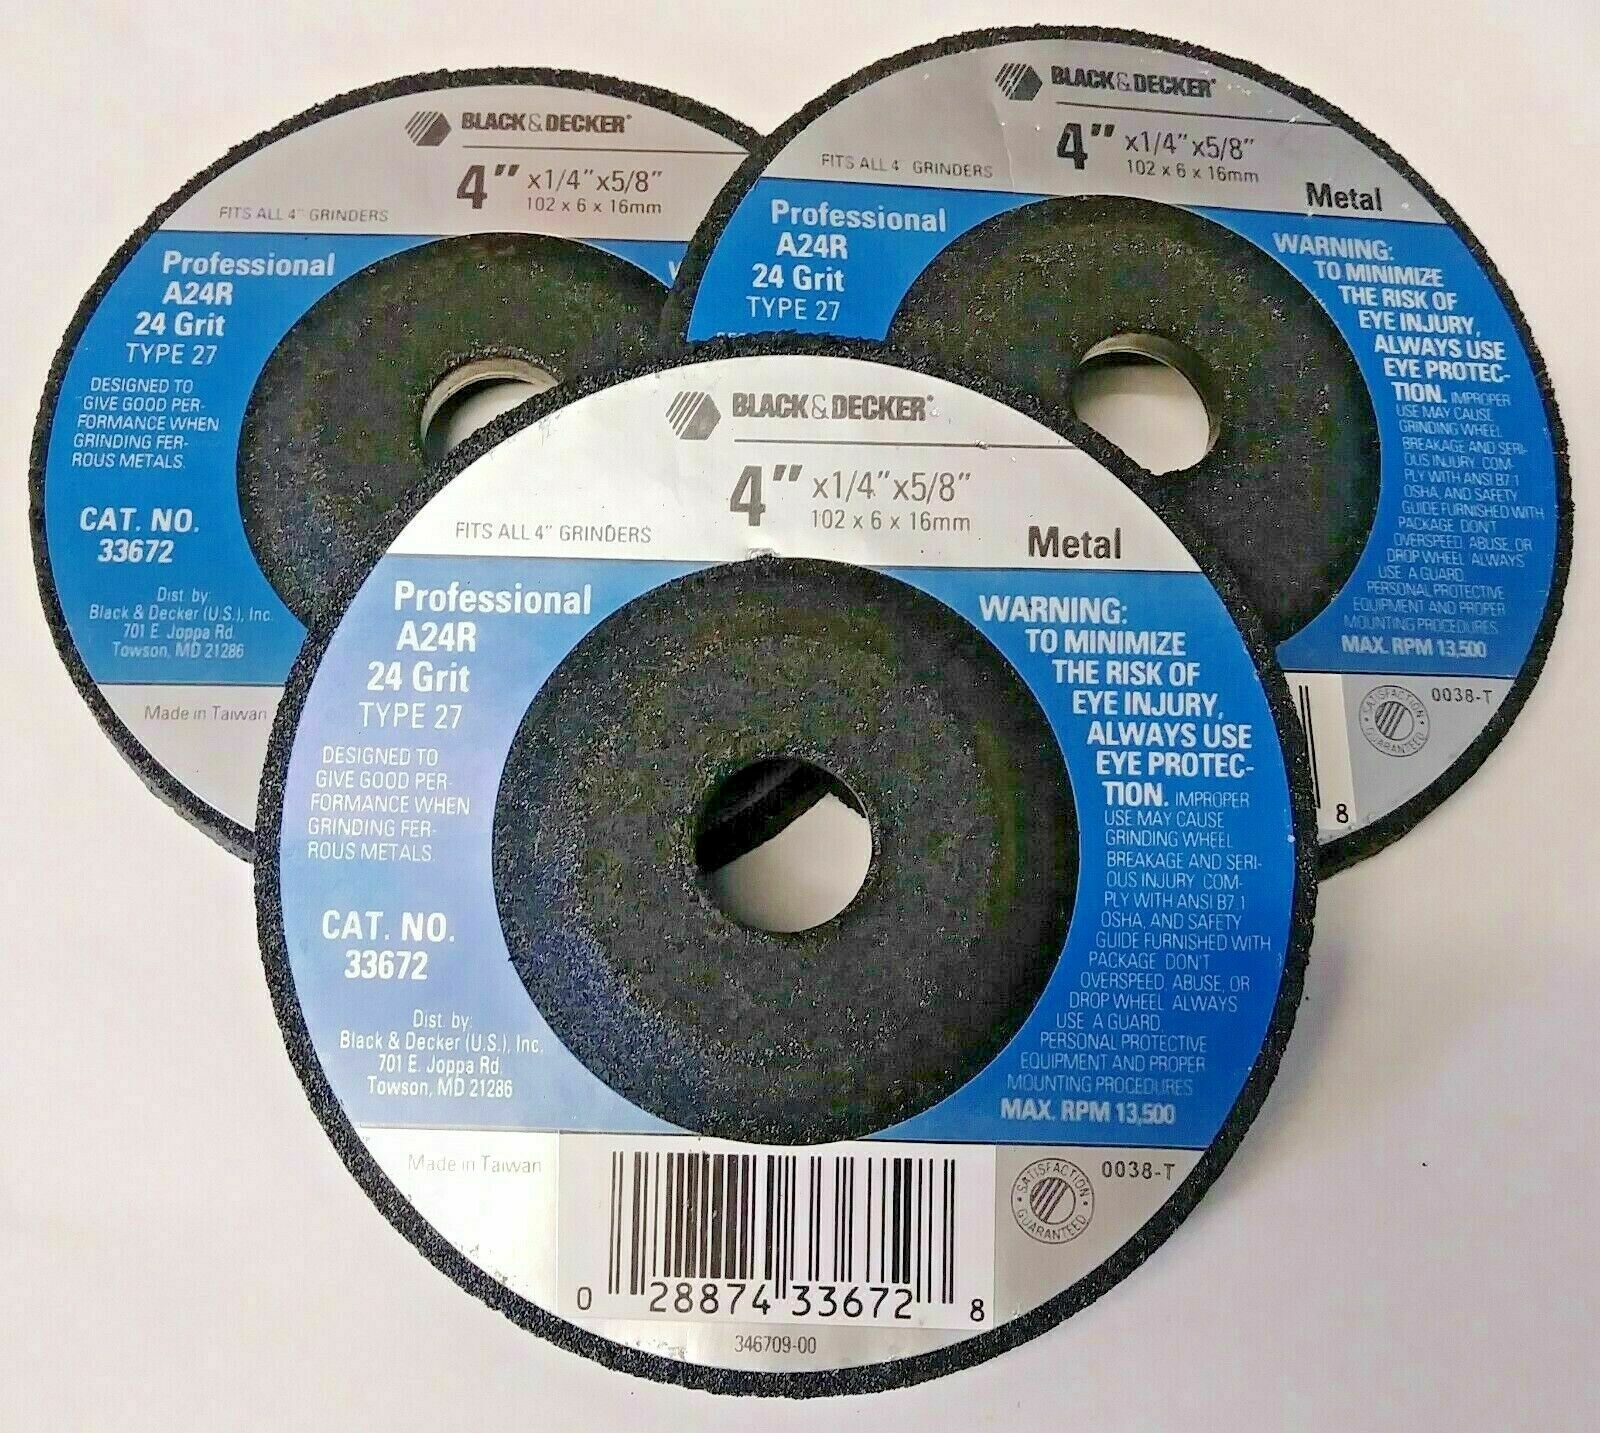 Black & Decker 33672 Blue 4" x 1/4" x 5/8" Metal Grinding Wheel Type 27 (3pcs)